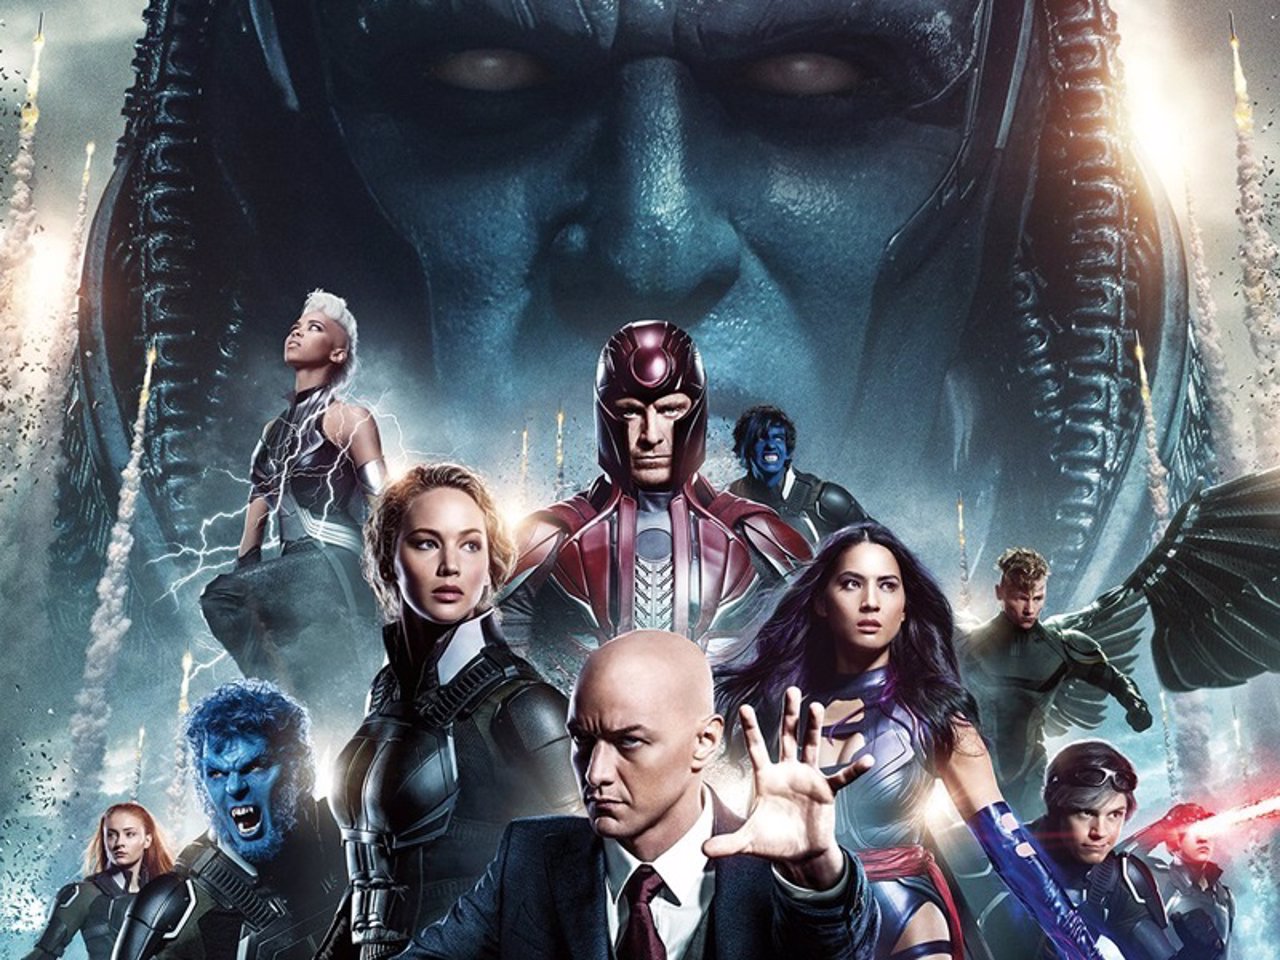 Cartel promocional de X-Men Apocalipsis